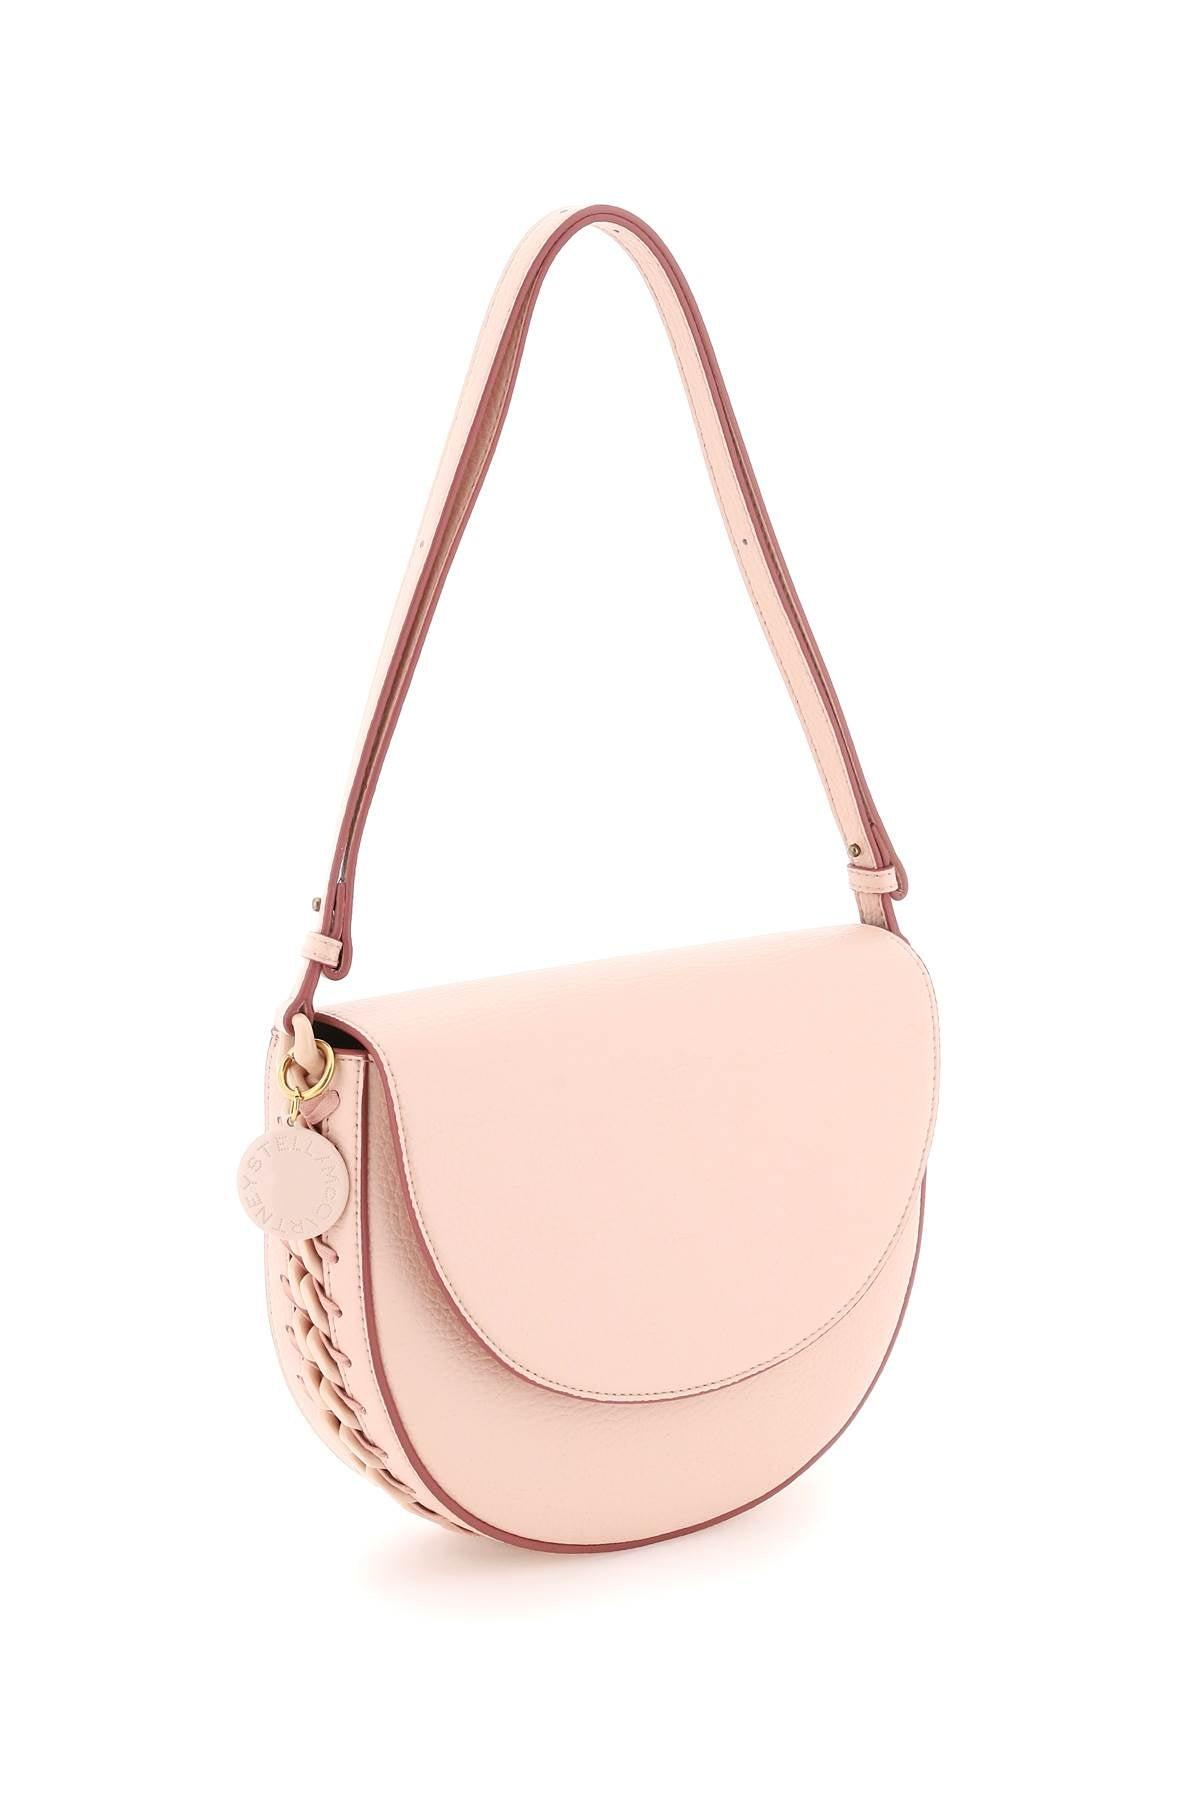 Stella McCartney Faux Leather Medium Frayme Bag in Pink | Lyst